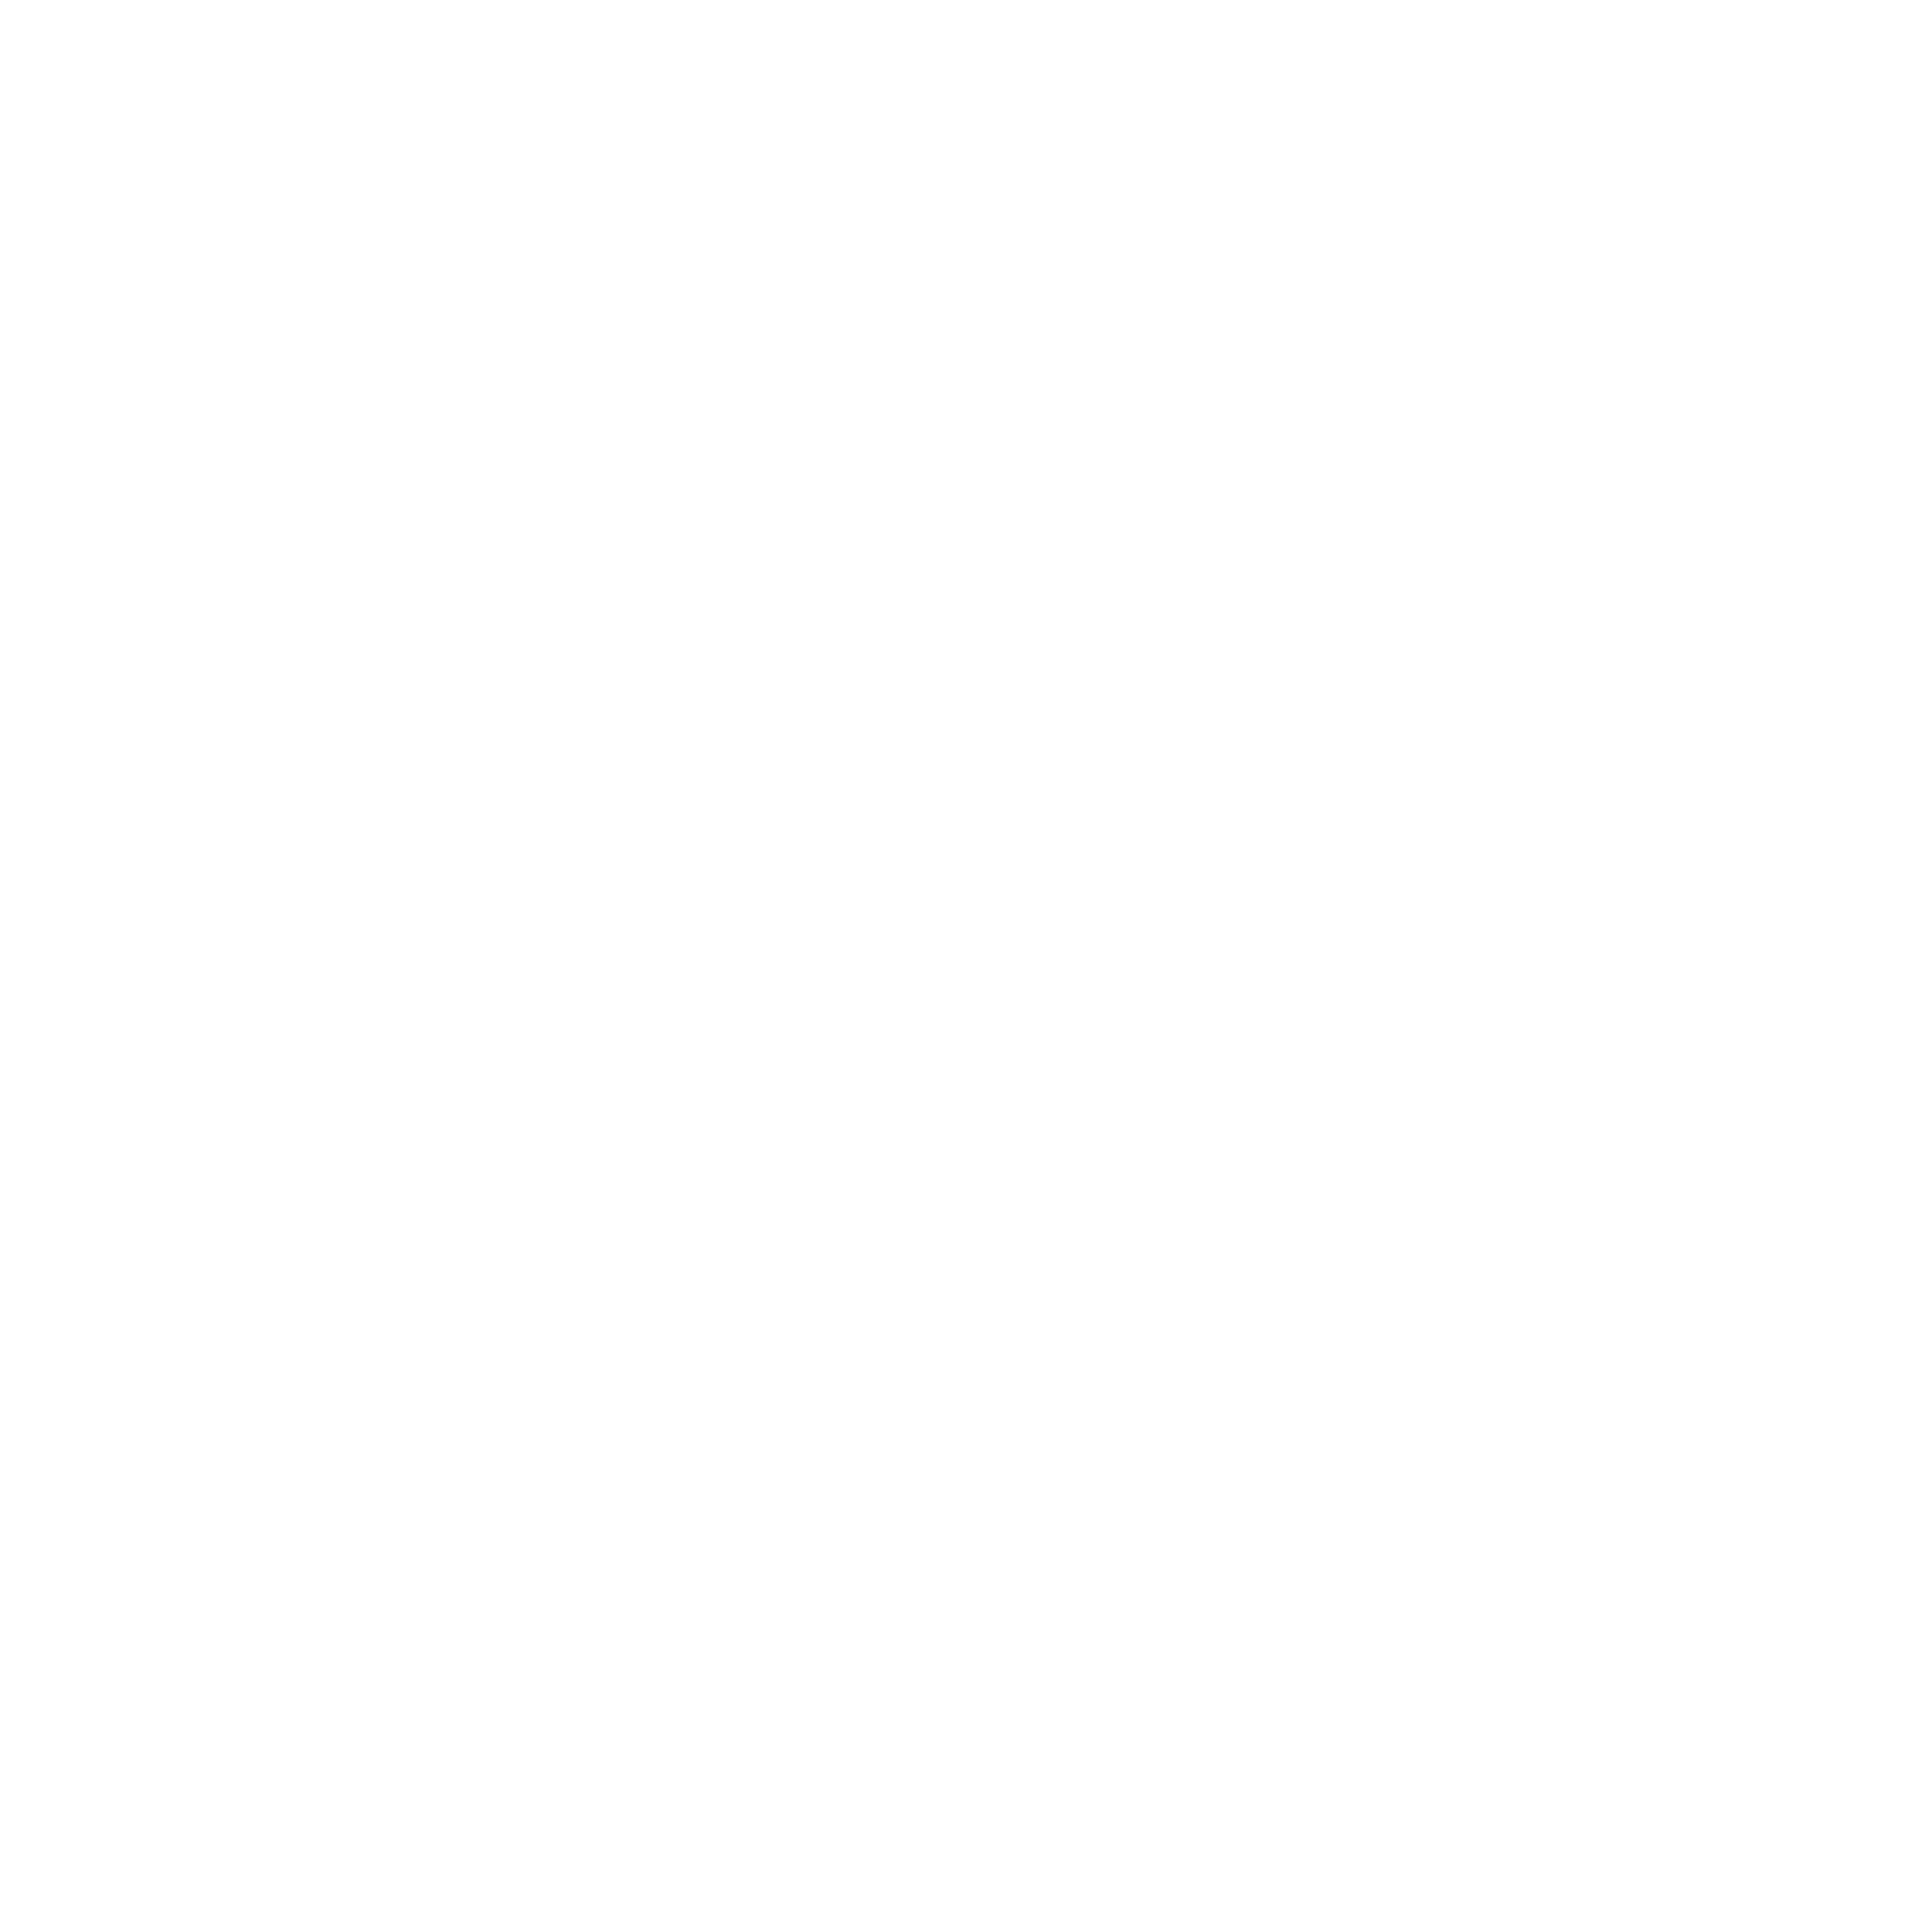 CRN Solution Provider 500 2024 Award Winner